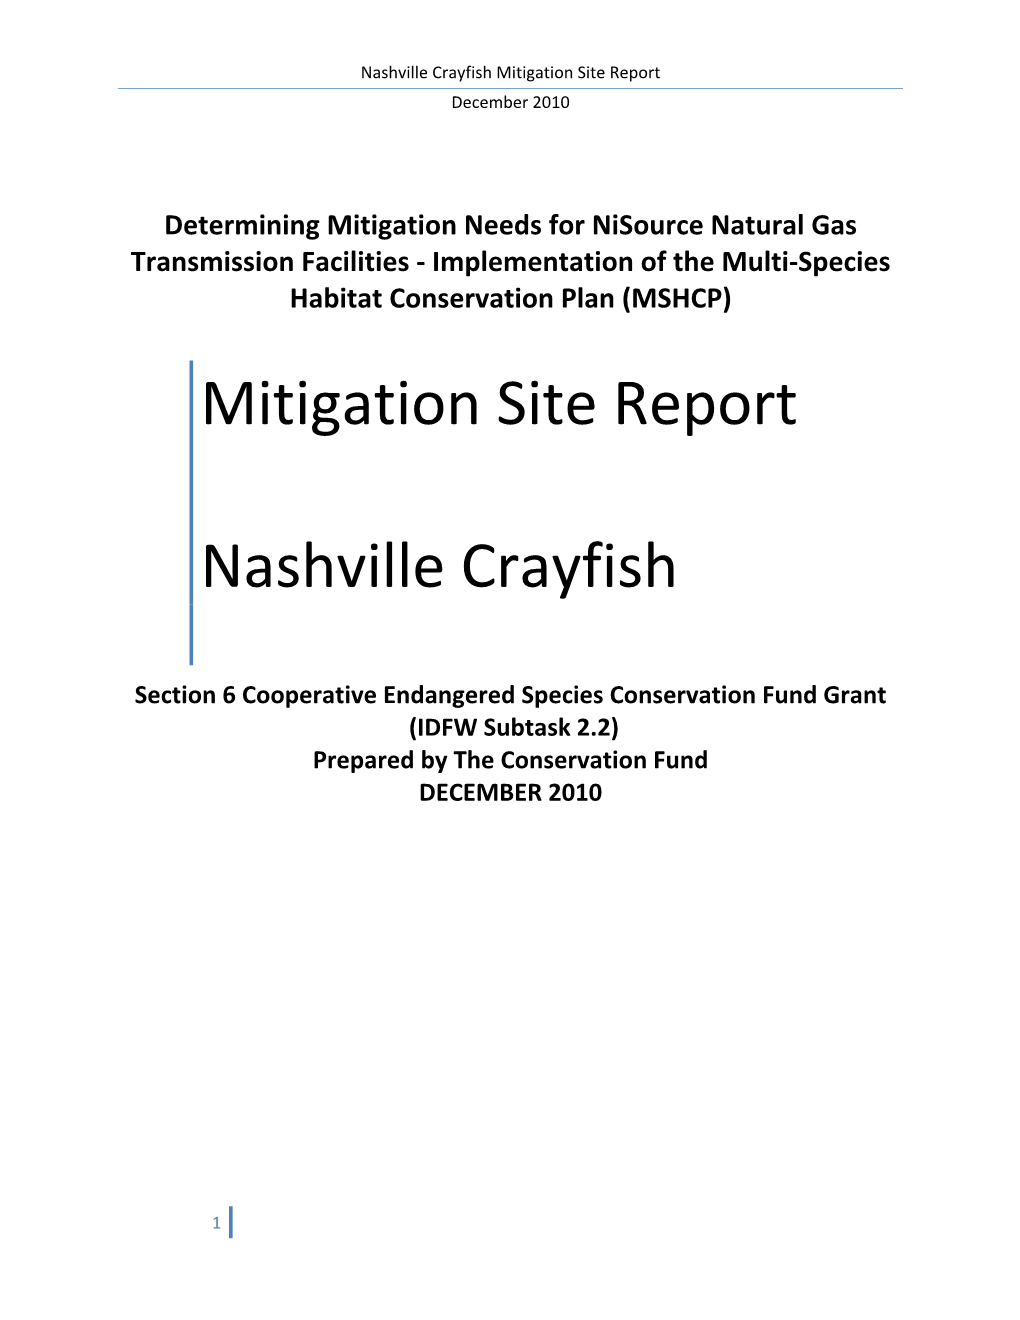 Nashville Crayfish Mitigation Site Report December 2010